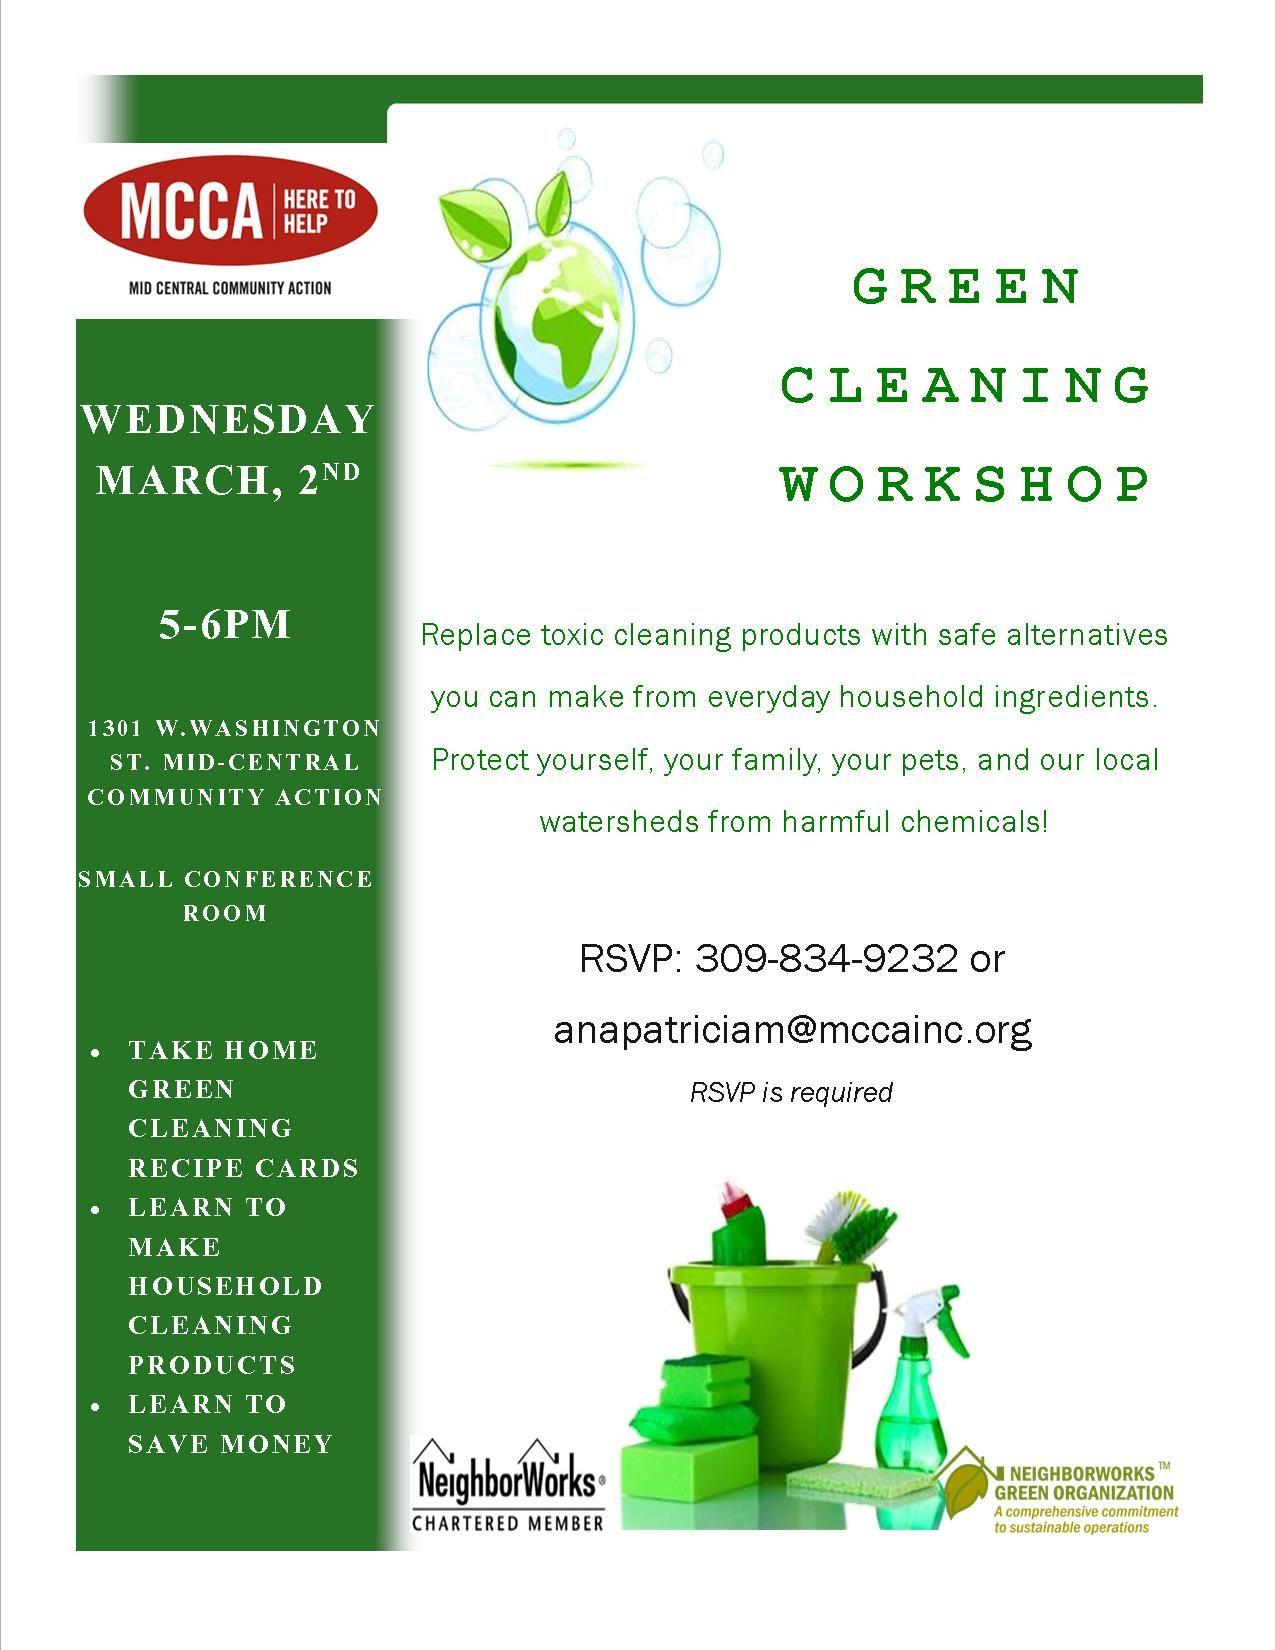 NeighborWorks Green Organization Logo - Green Cleaning Workshop